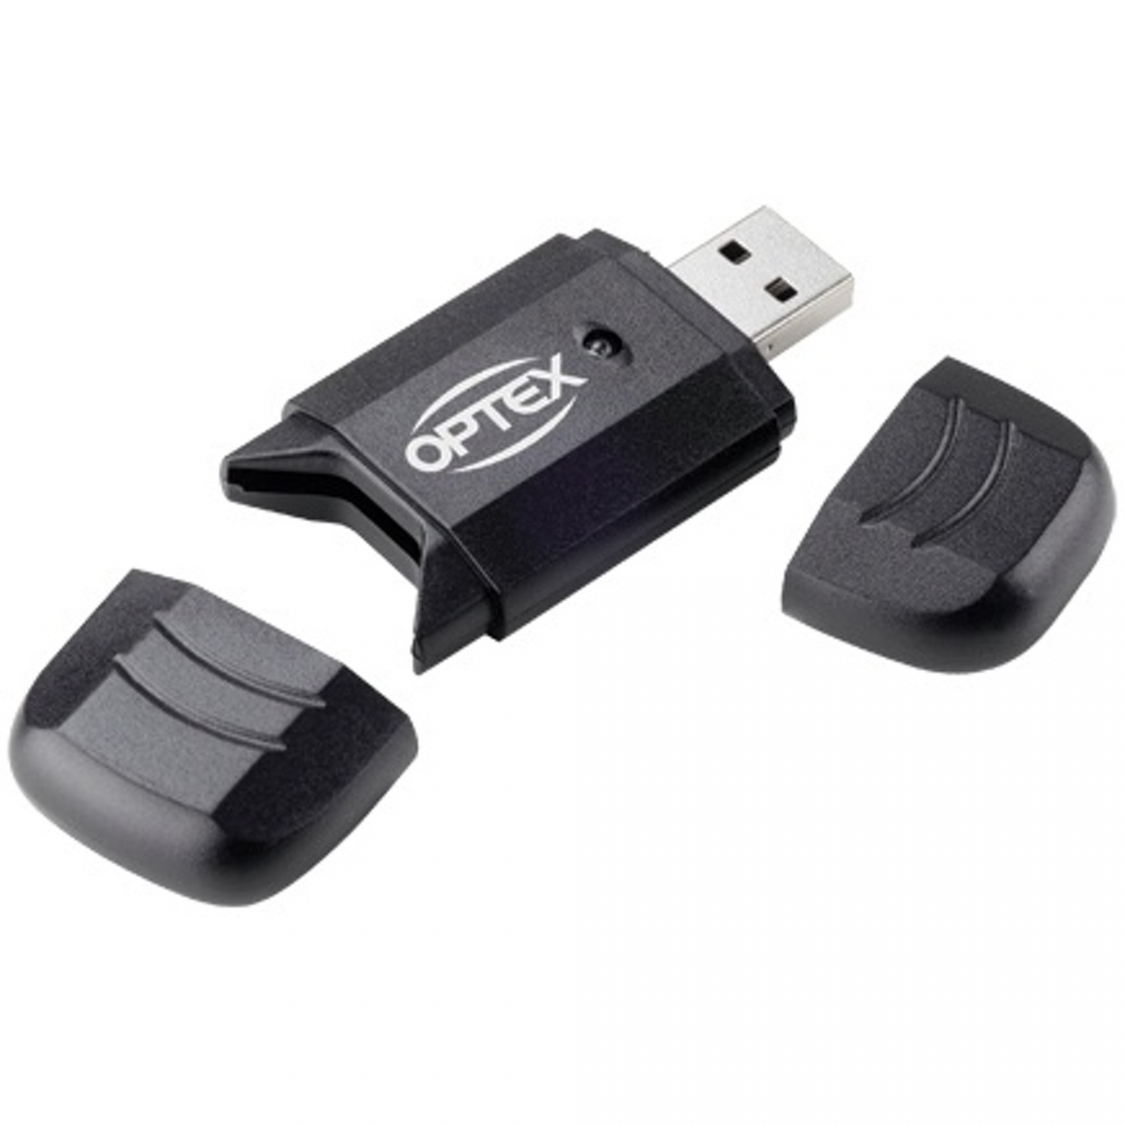 Optex SD/Micro Card Reader